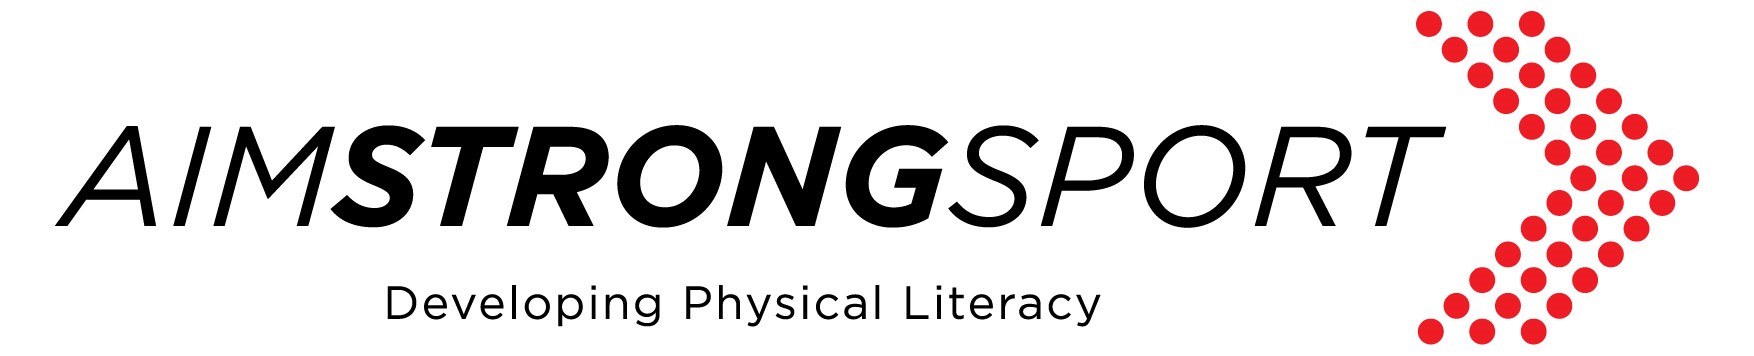 Aimstrong Sport logo